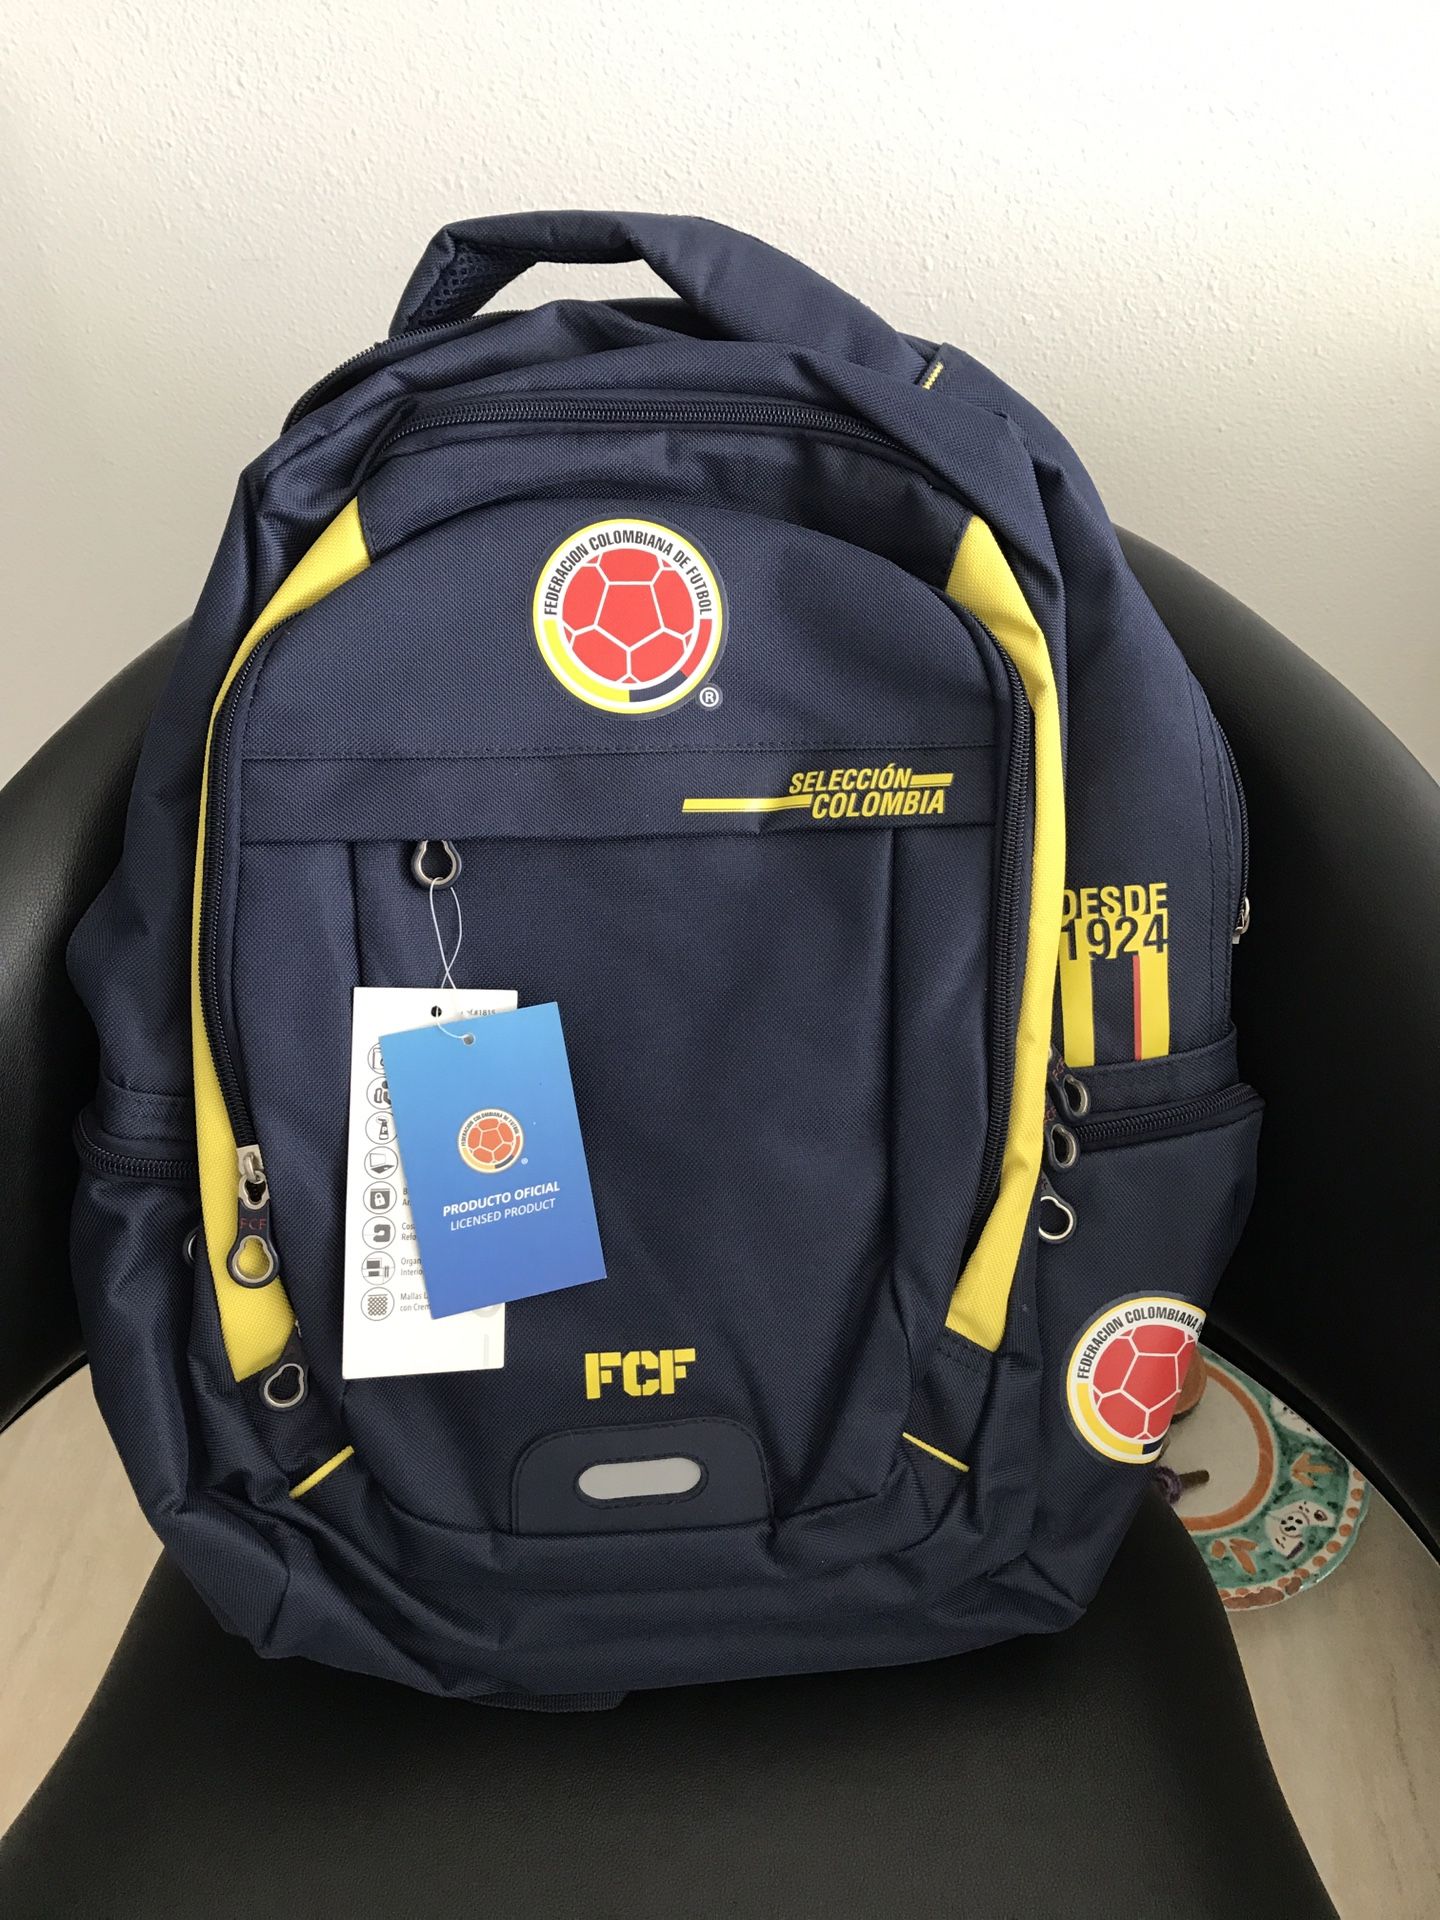 Selección Colombia FCF Backpack